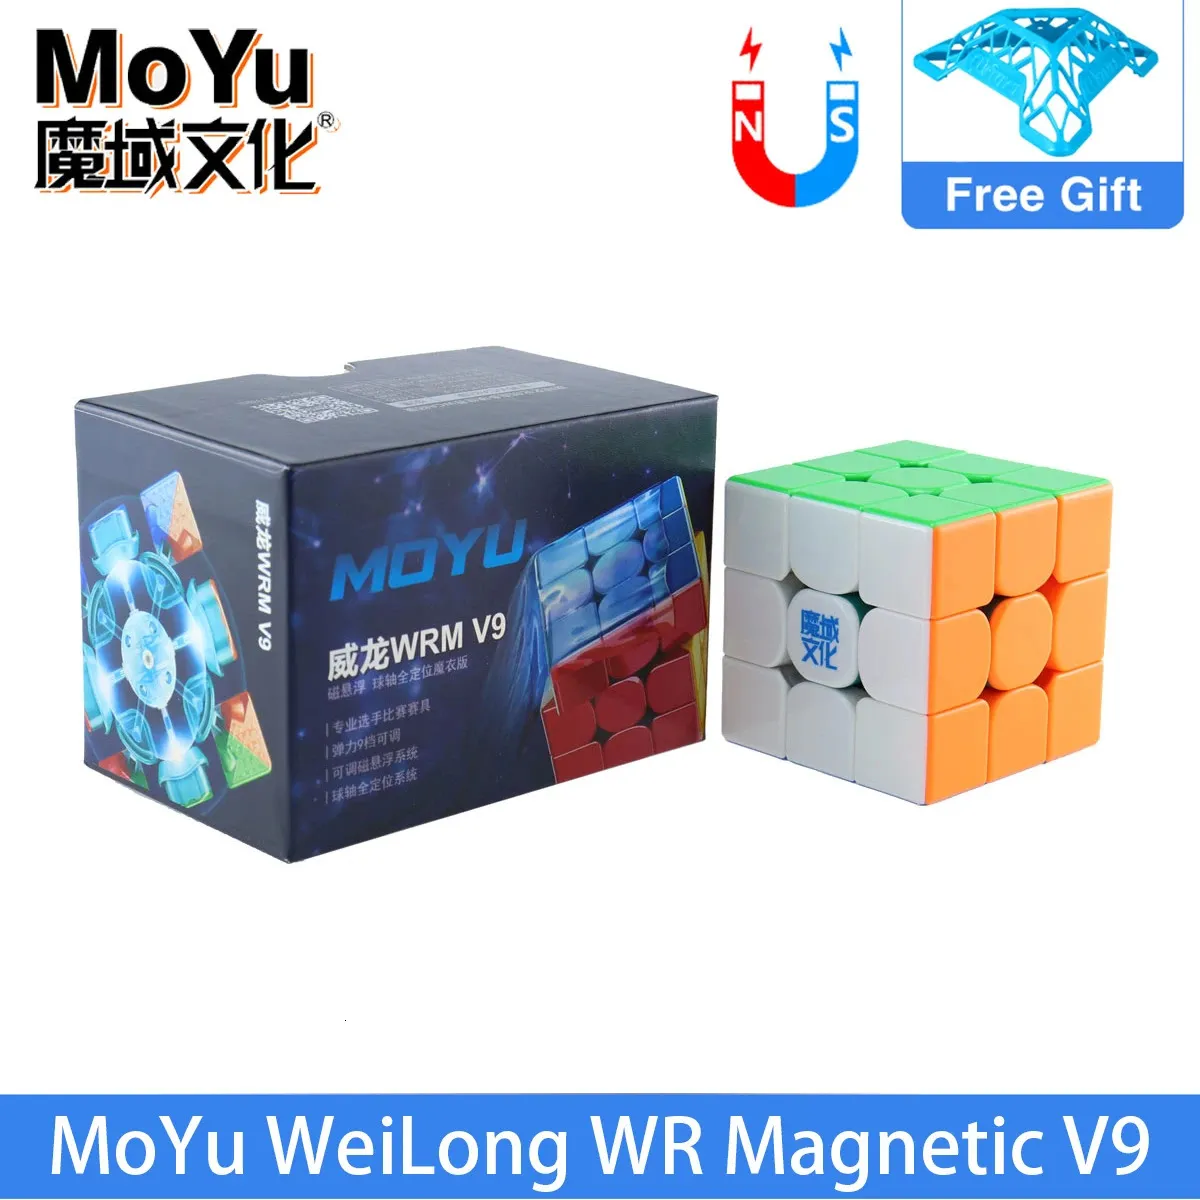 Magic Cubes Moyu Weilong WRM V9 Ball Core UV 3x3 Magic Speed ​​Cube Professional Moyu Weilong WR M V9 Maglev 3x3x3 Cubo Magico Puzzle Toys 231019